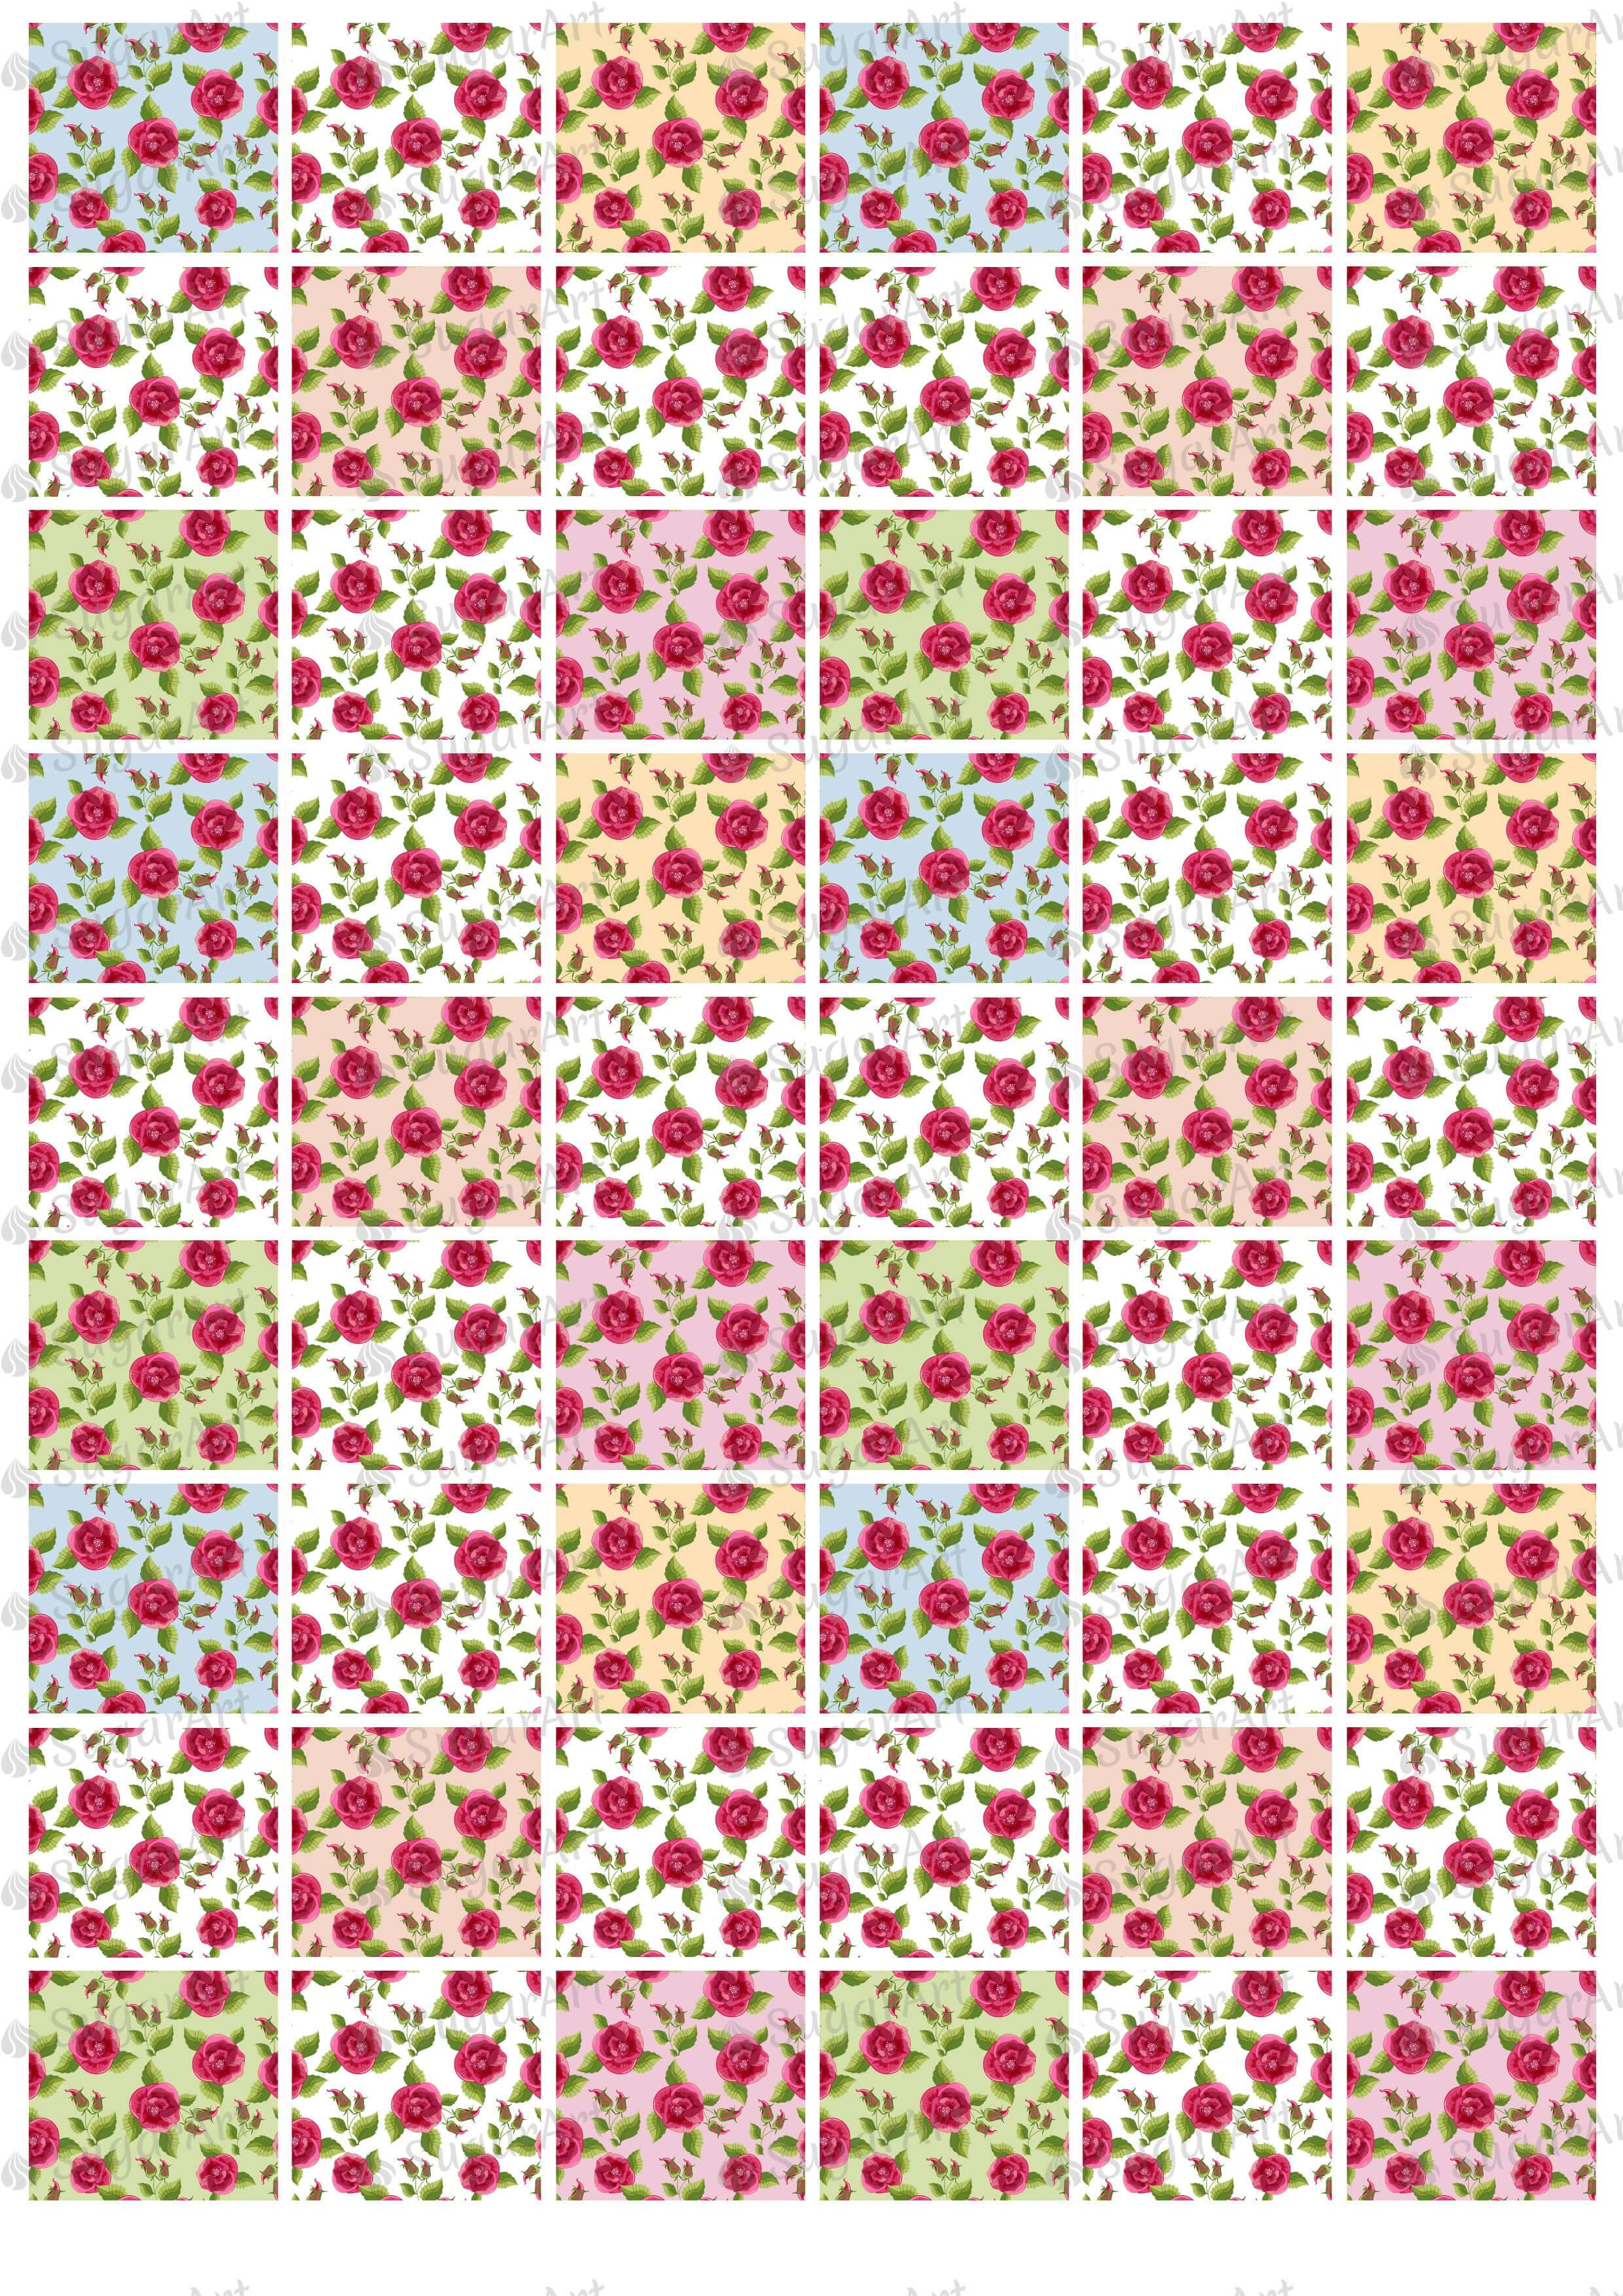 Floral Background - BSA020-Sugar Stamp sheets-Sugar Art